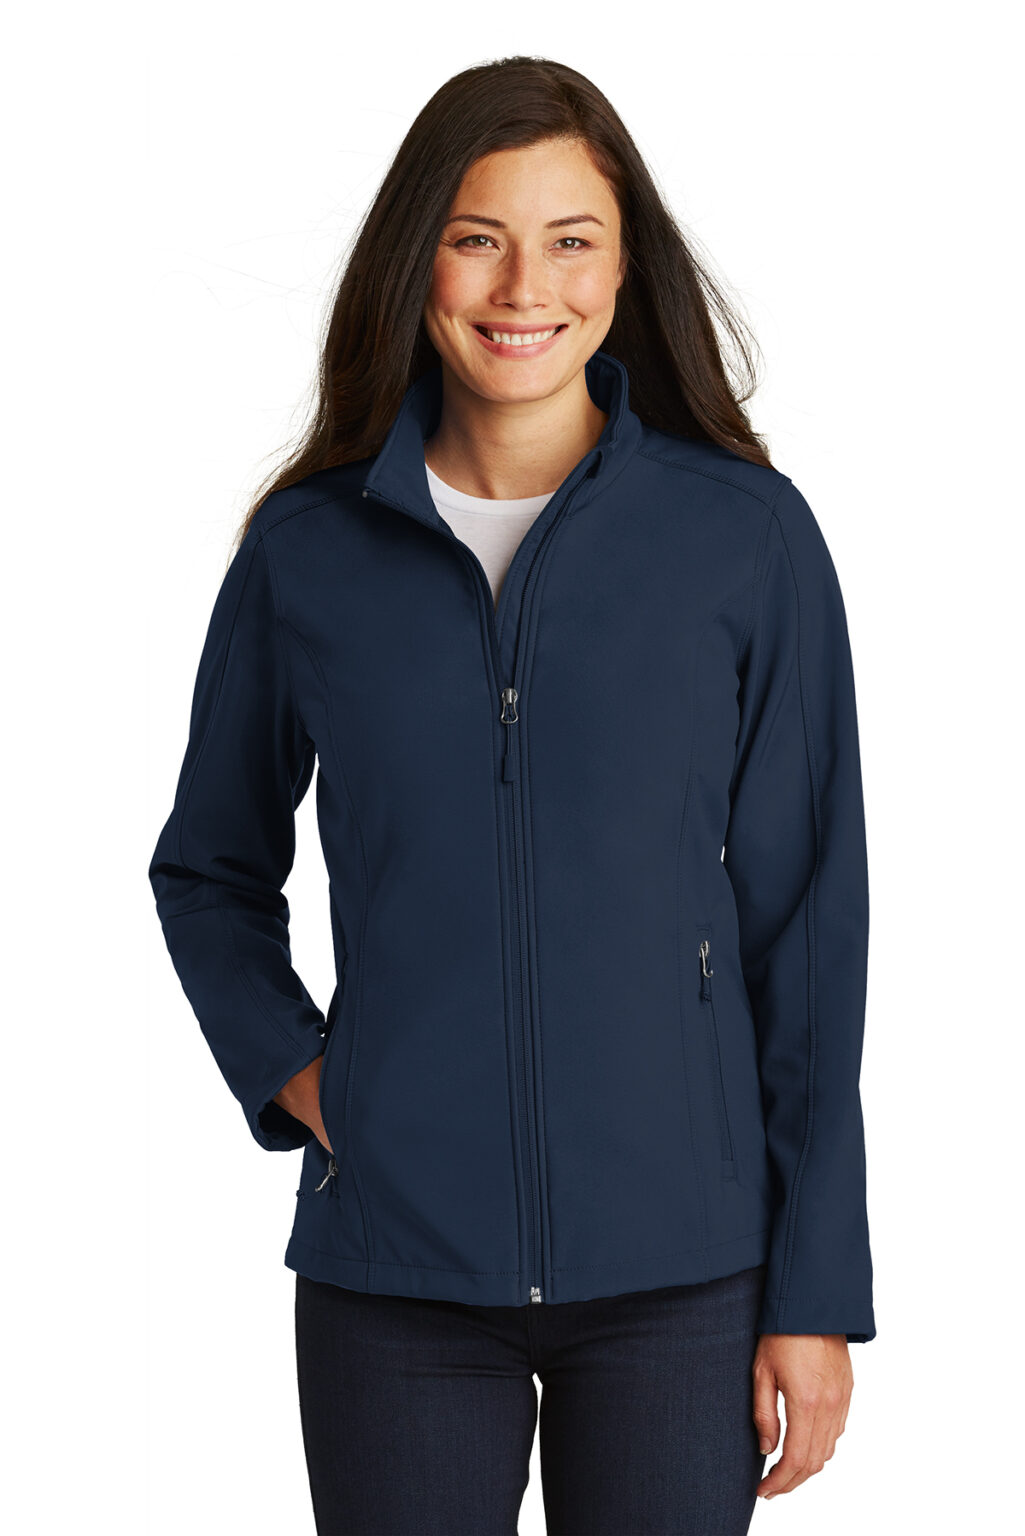 Ladies Soft Shell Jacket- #L317EIN | Central Uniforms